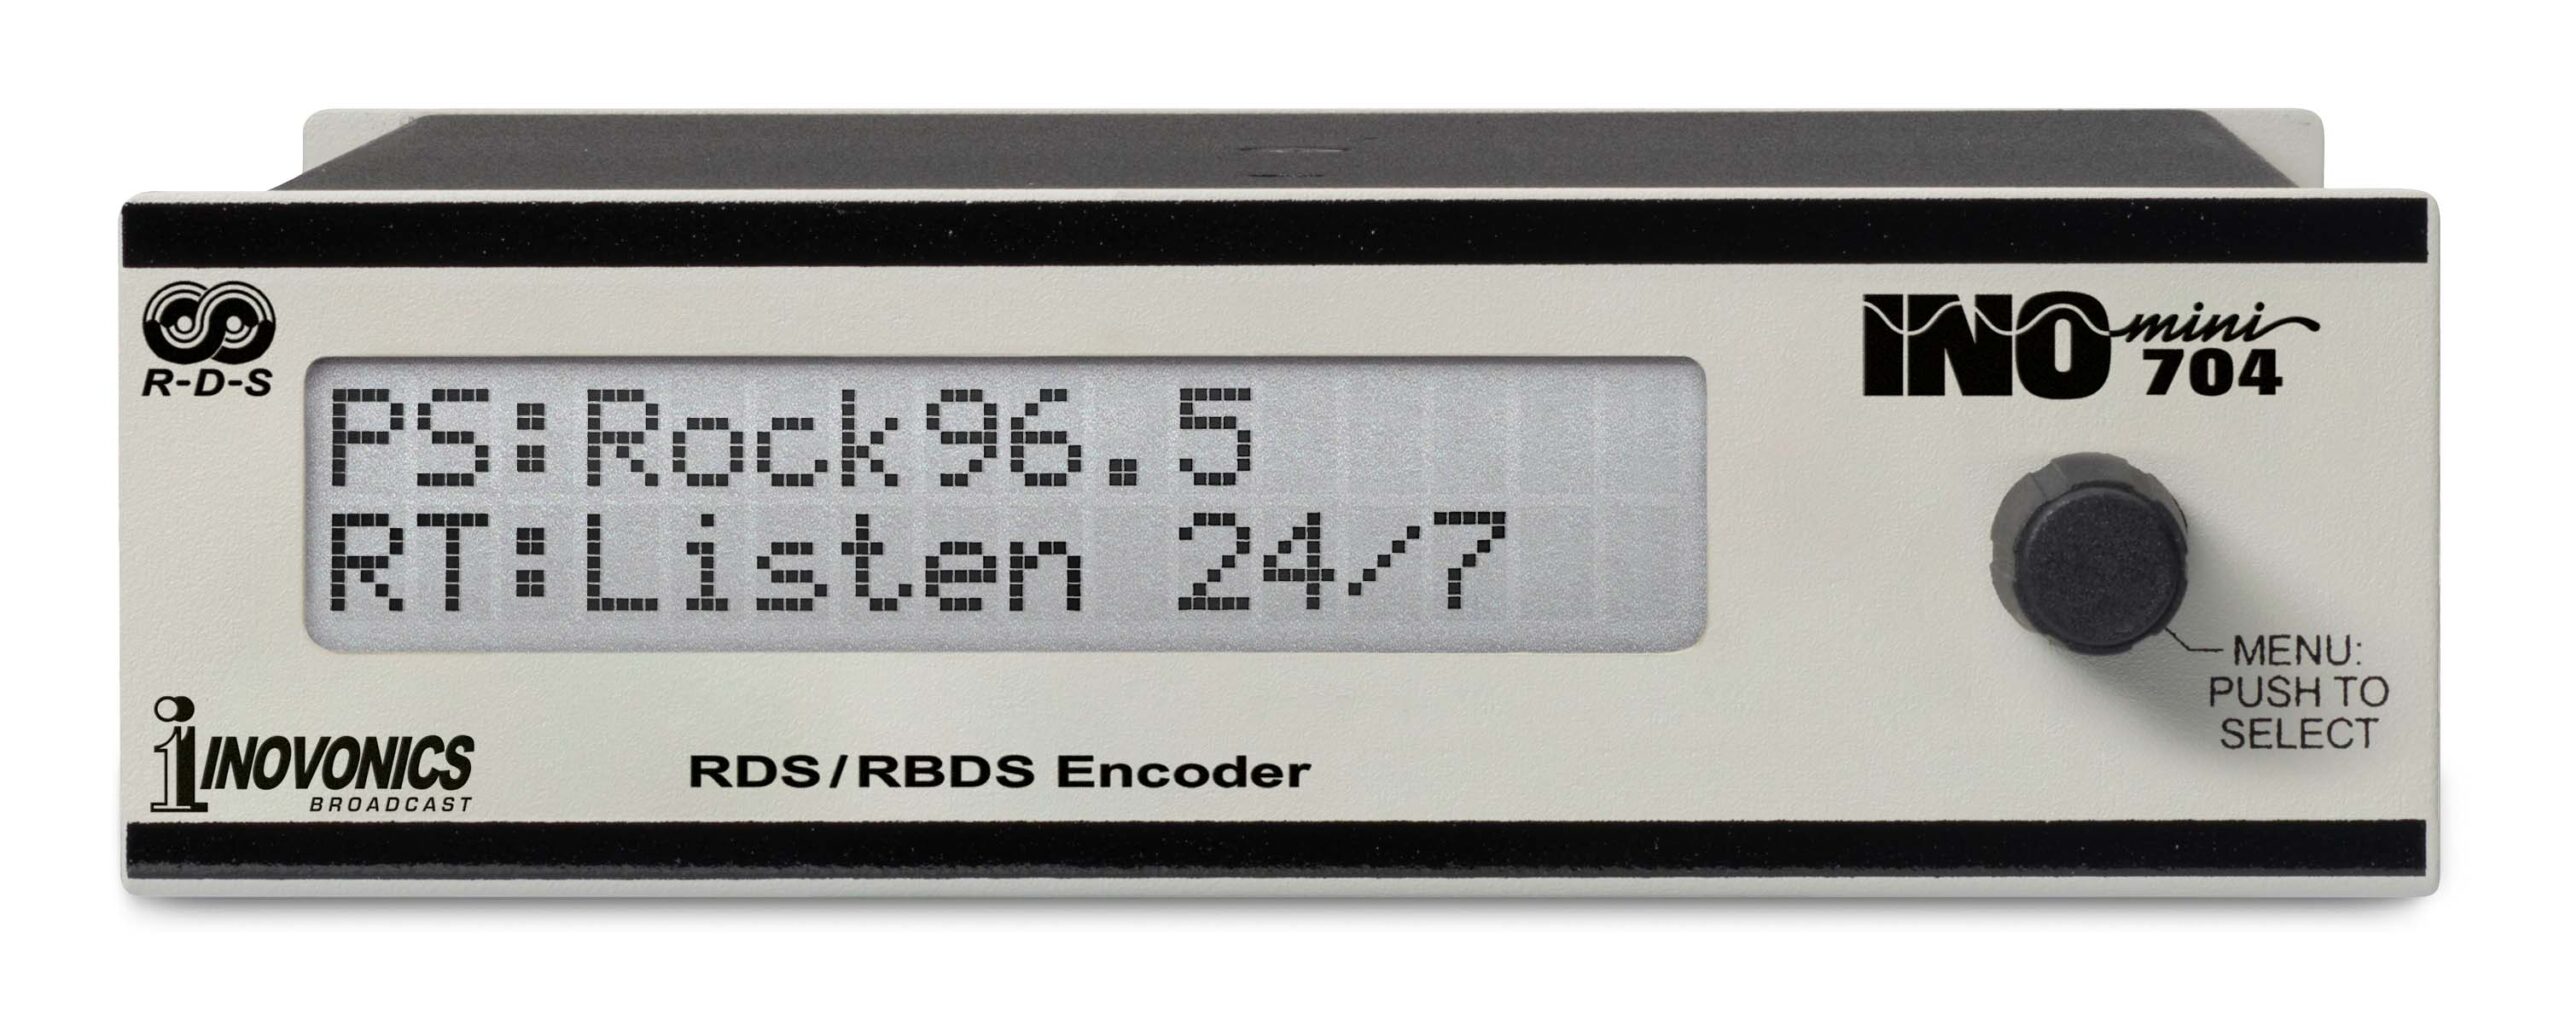 Inovonics 704 RDS/RBDS Encoder Image - Front